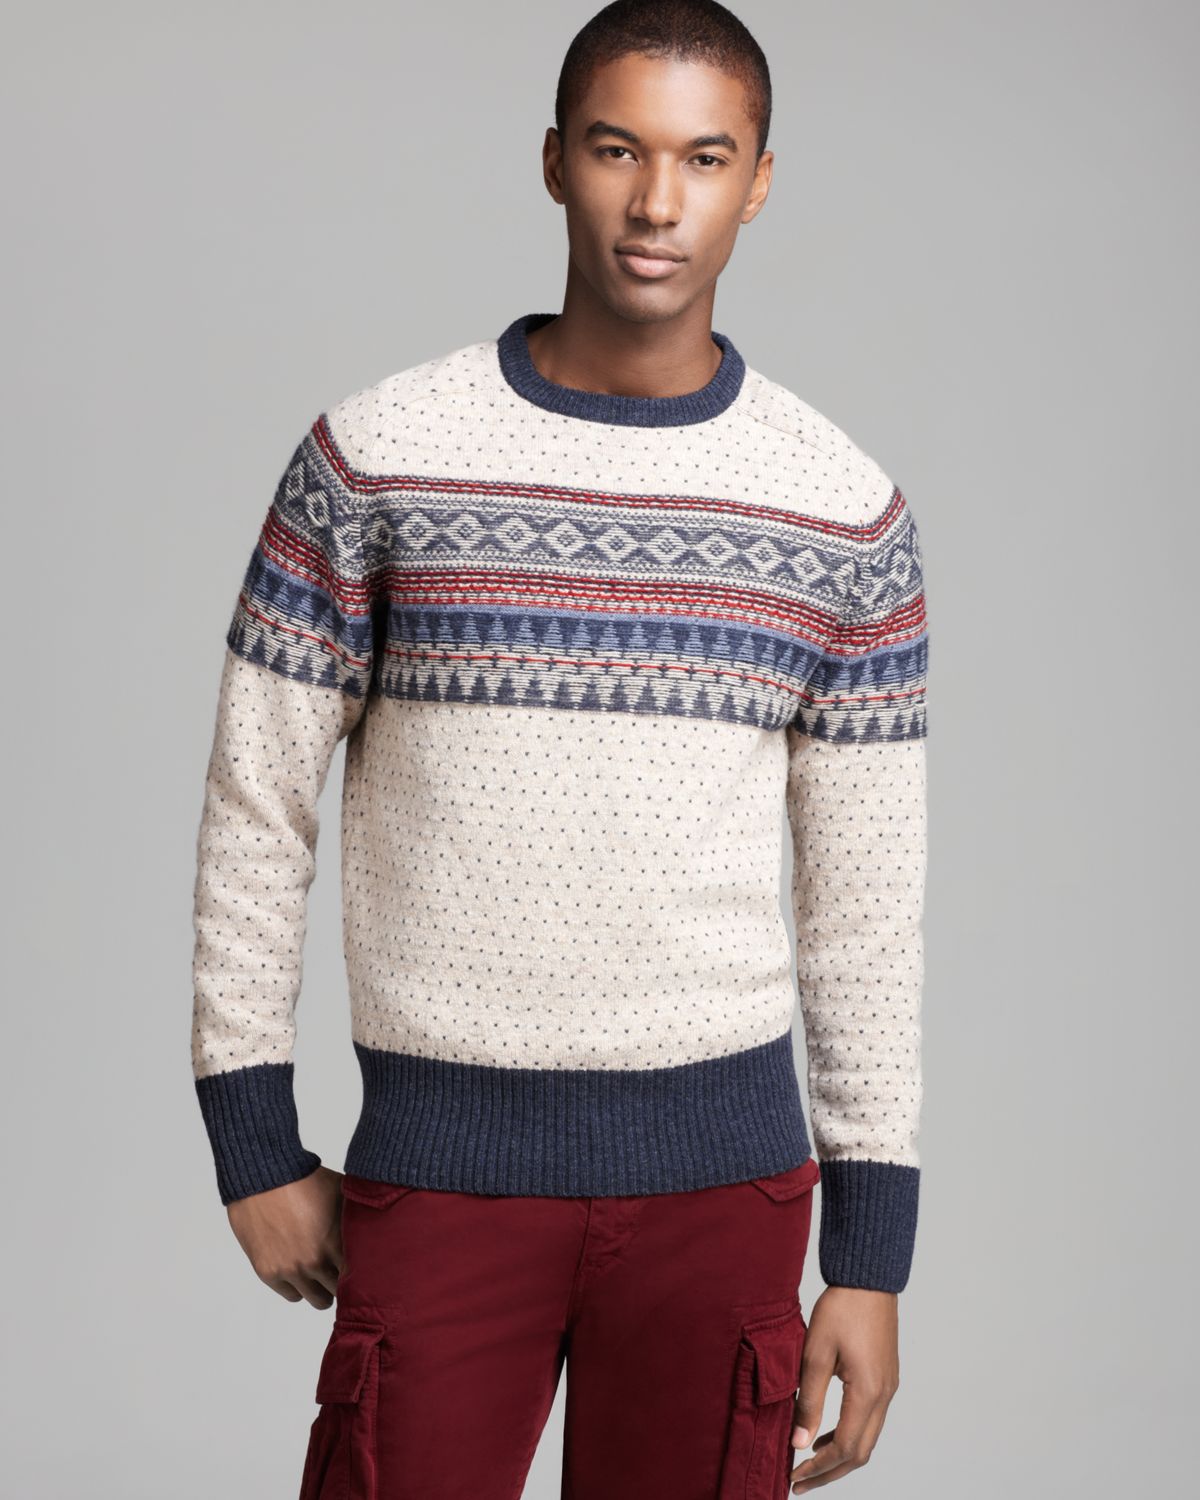 Lyst - Gant The Mb Fairisle Crewneck Sweater in Natural for Men